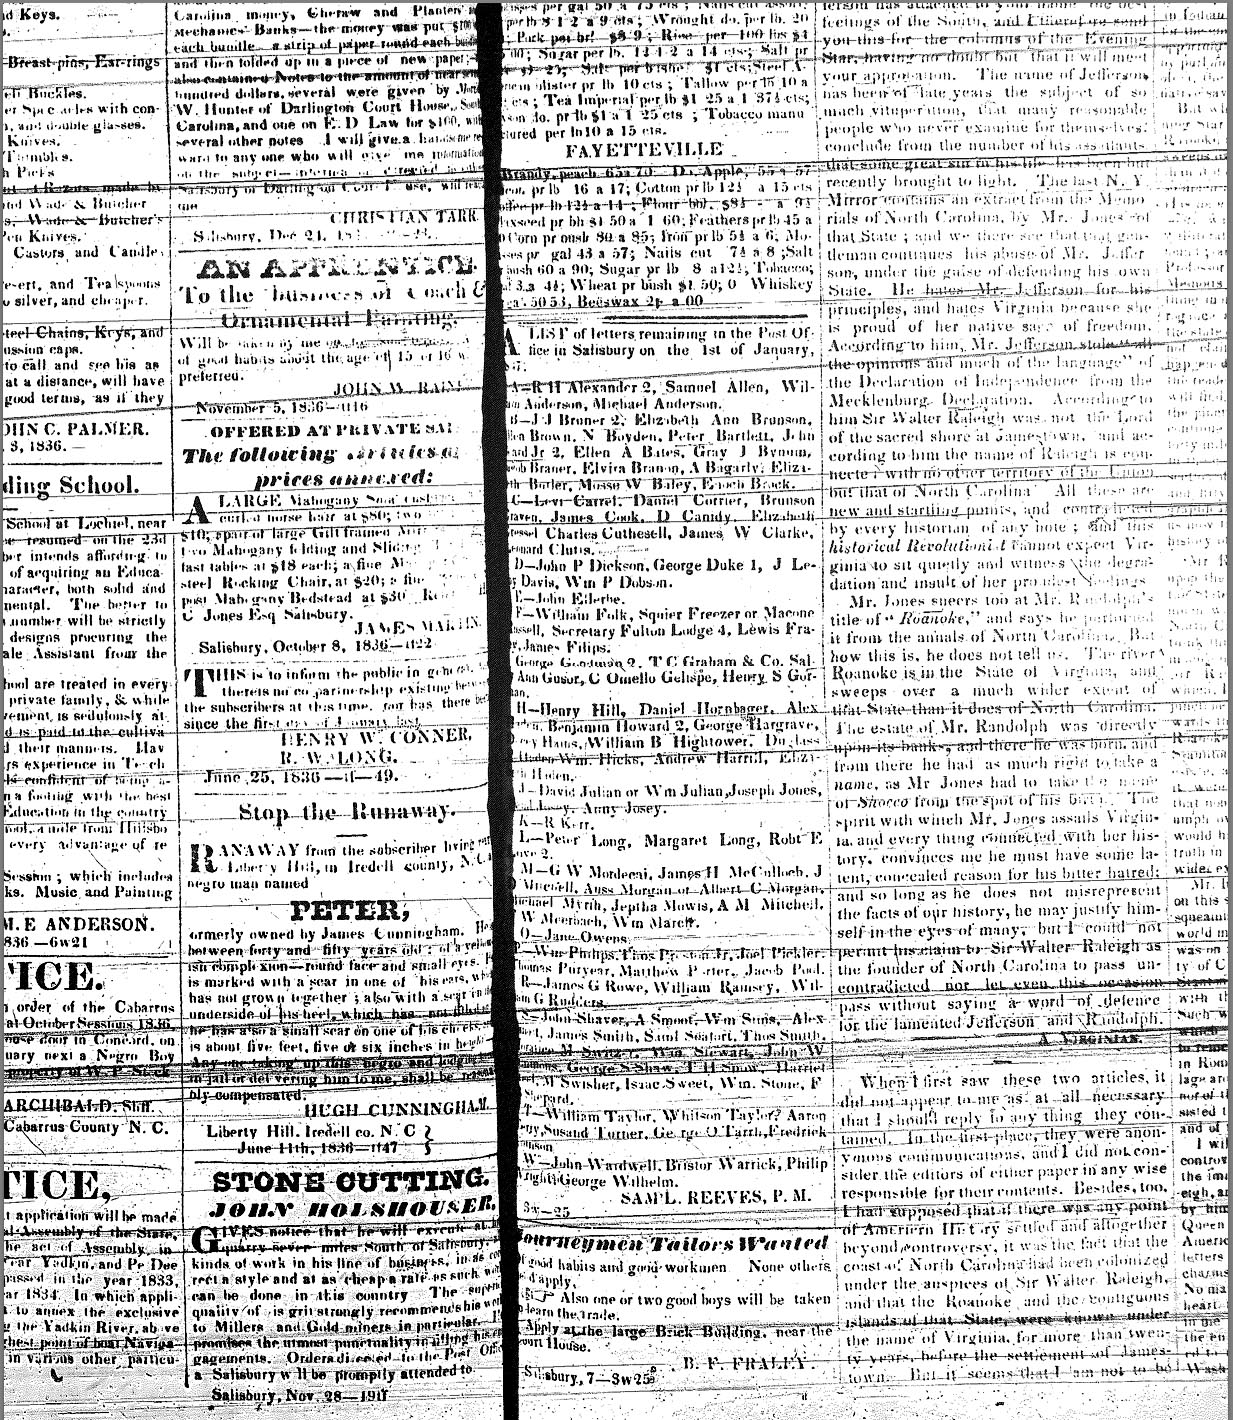 Carolina Watchman slave ads: January 7, 1837